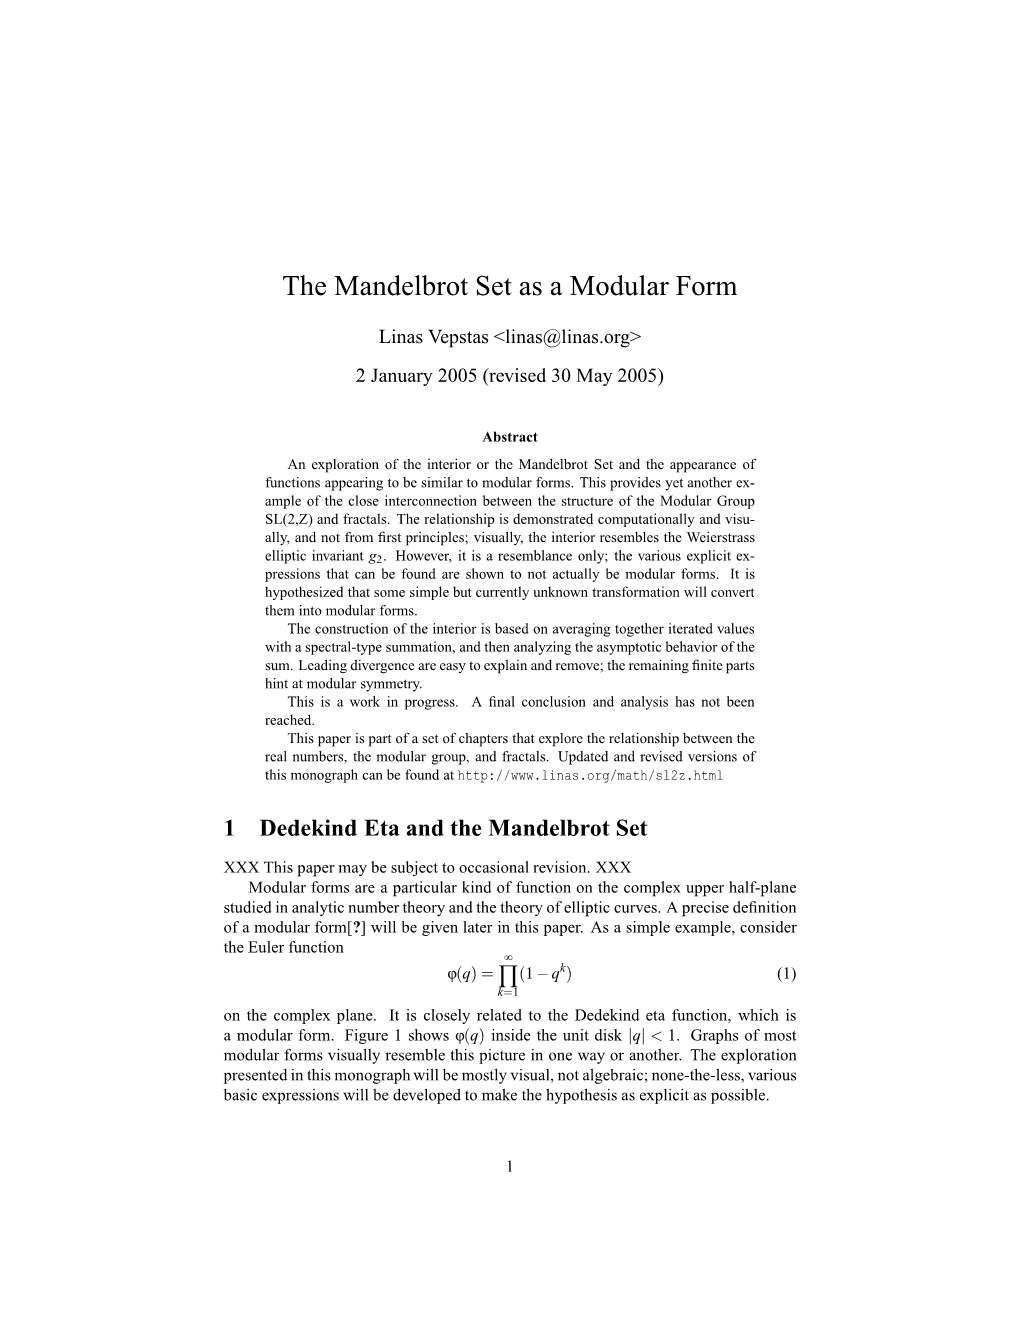 The Mandelbrot Set As a Modular Form